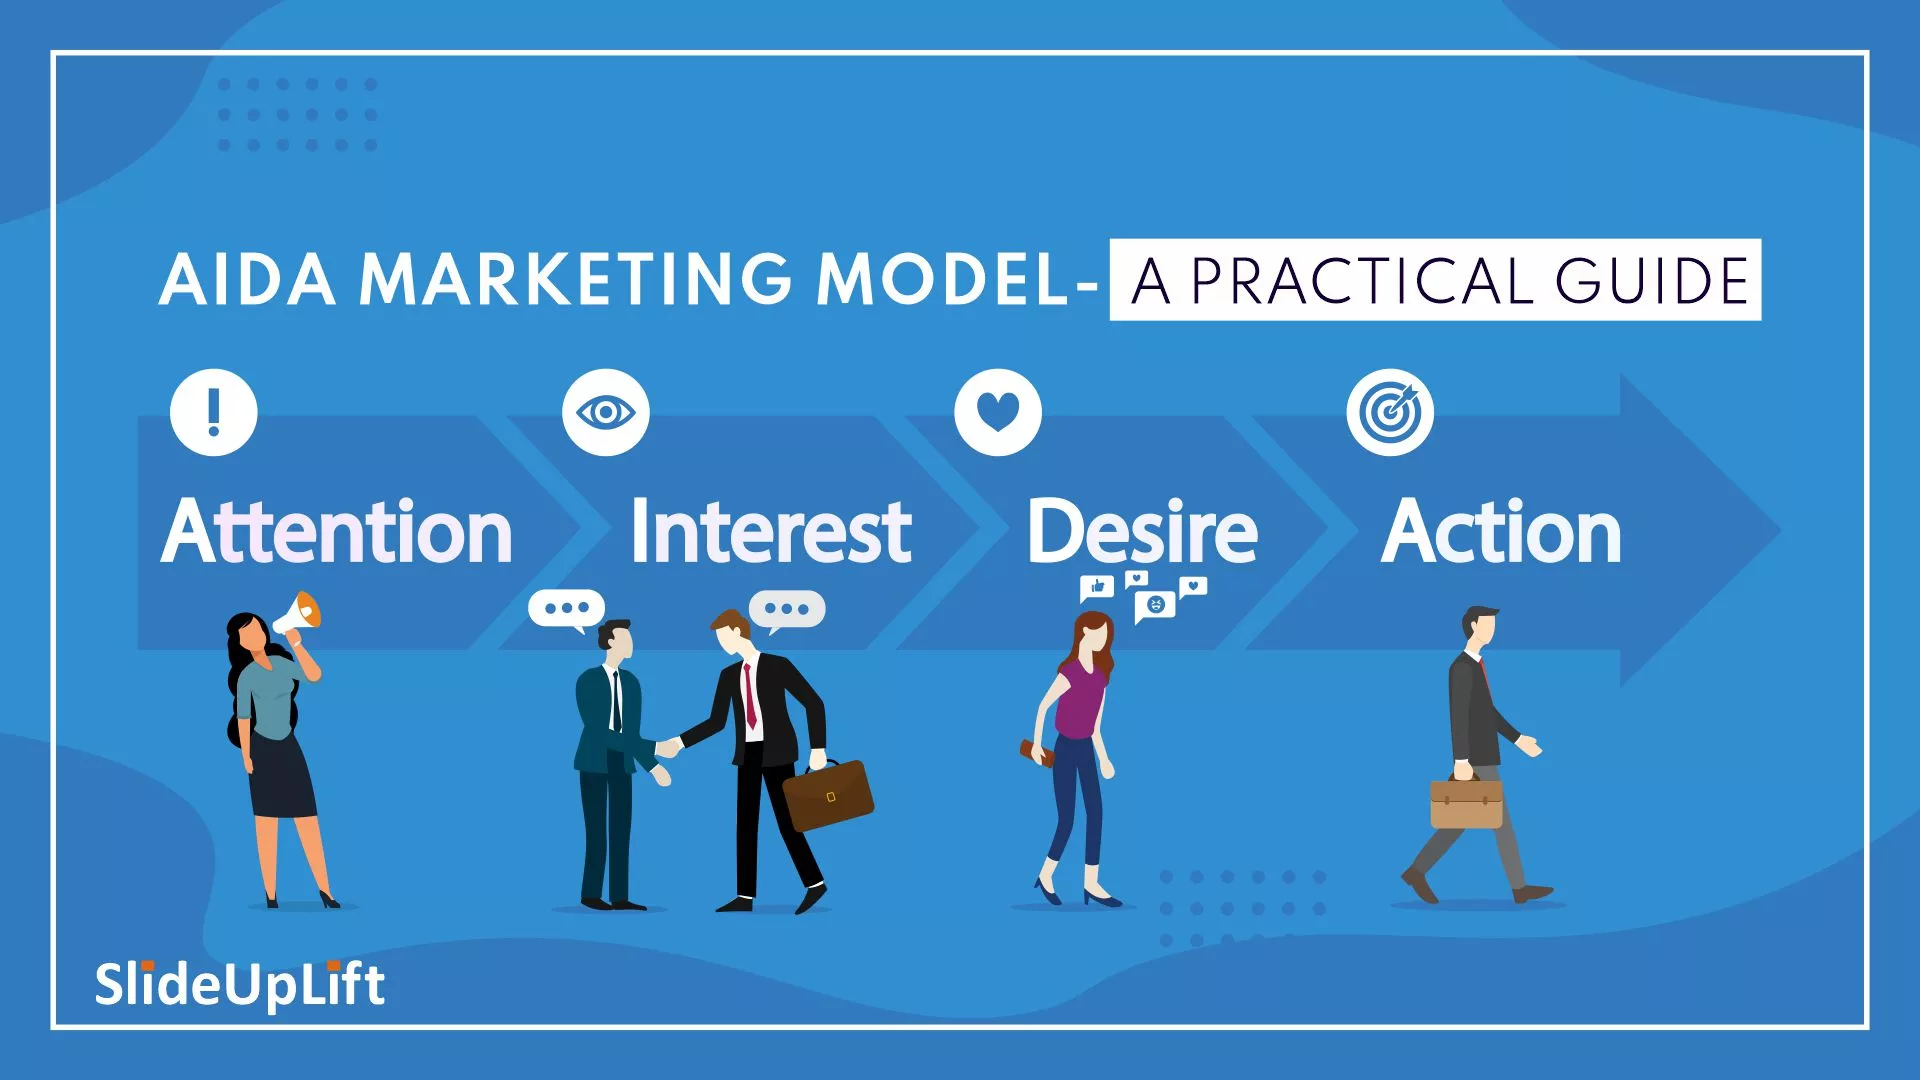 The AIDA Marketing Model- A Practical Guide